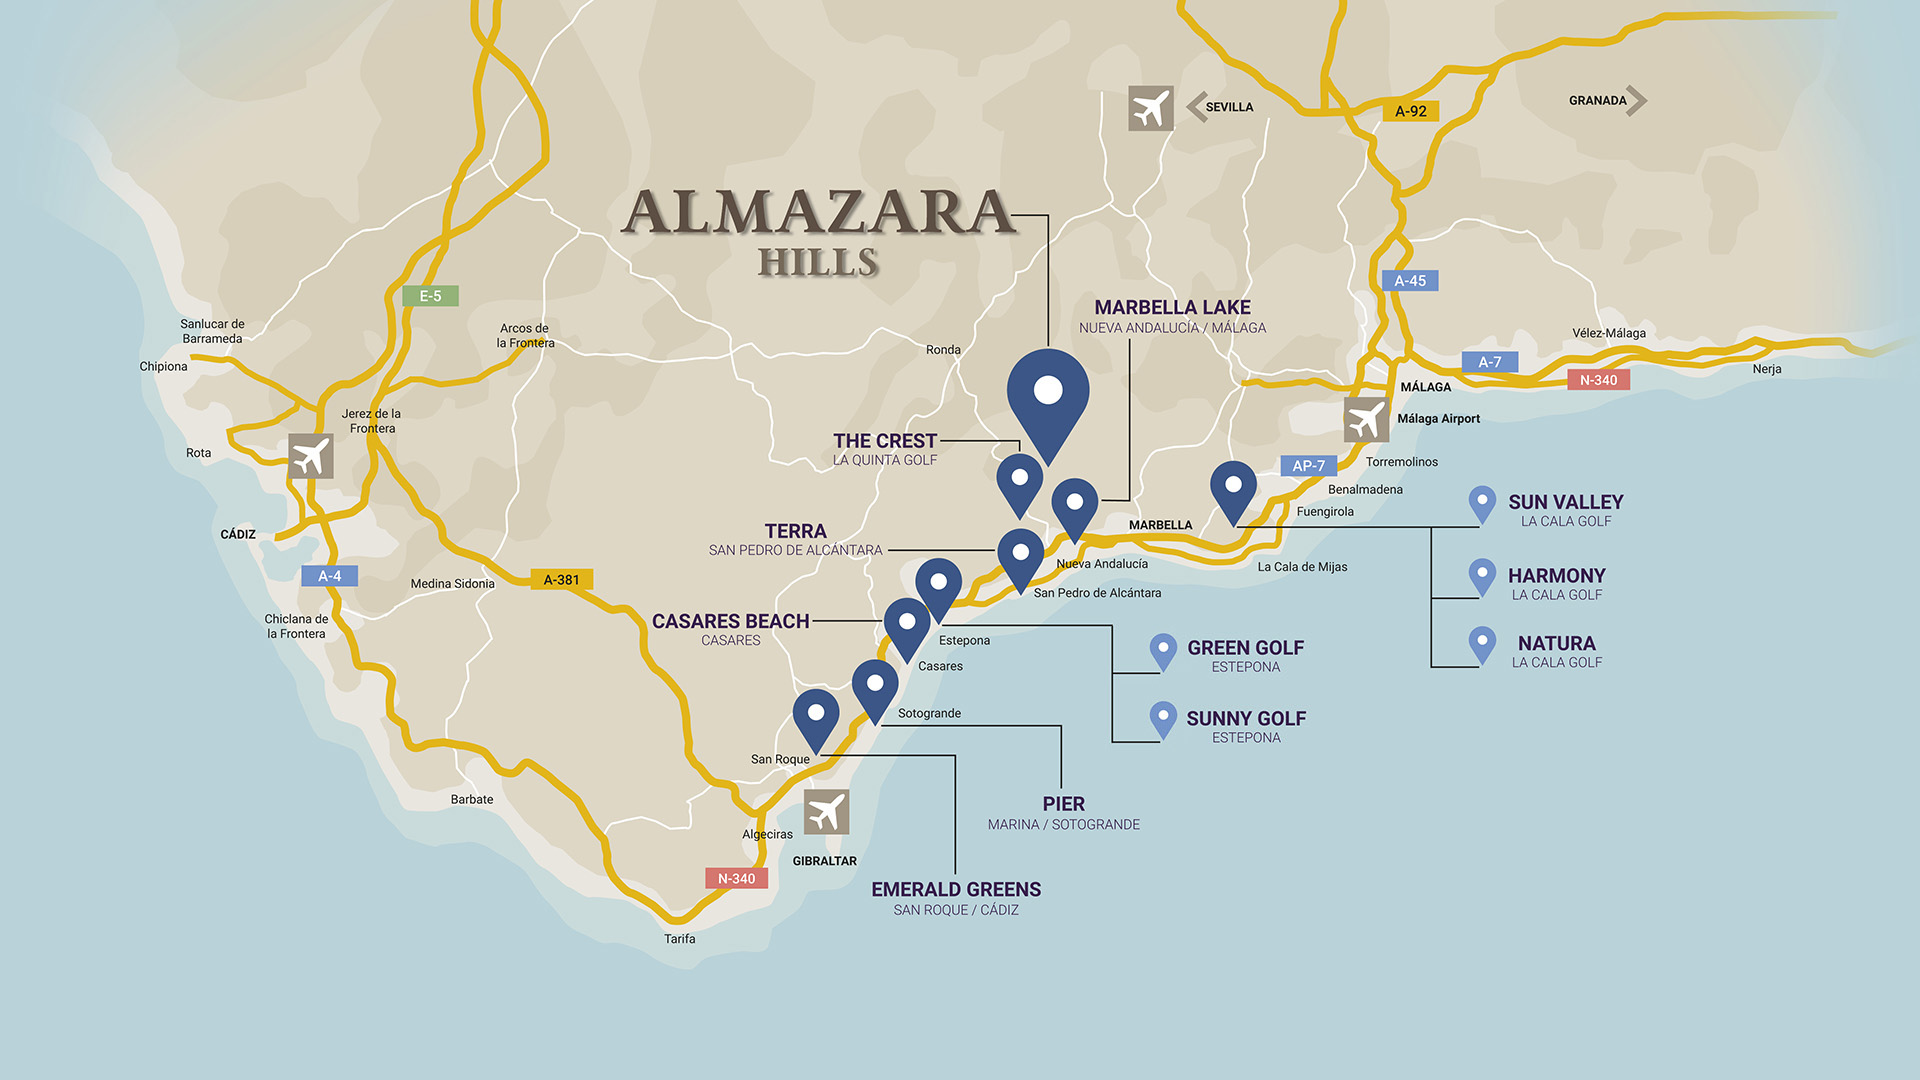 Mapa ALMAZARA es